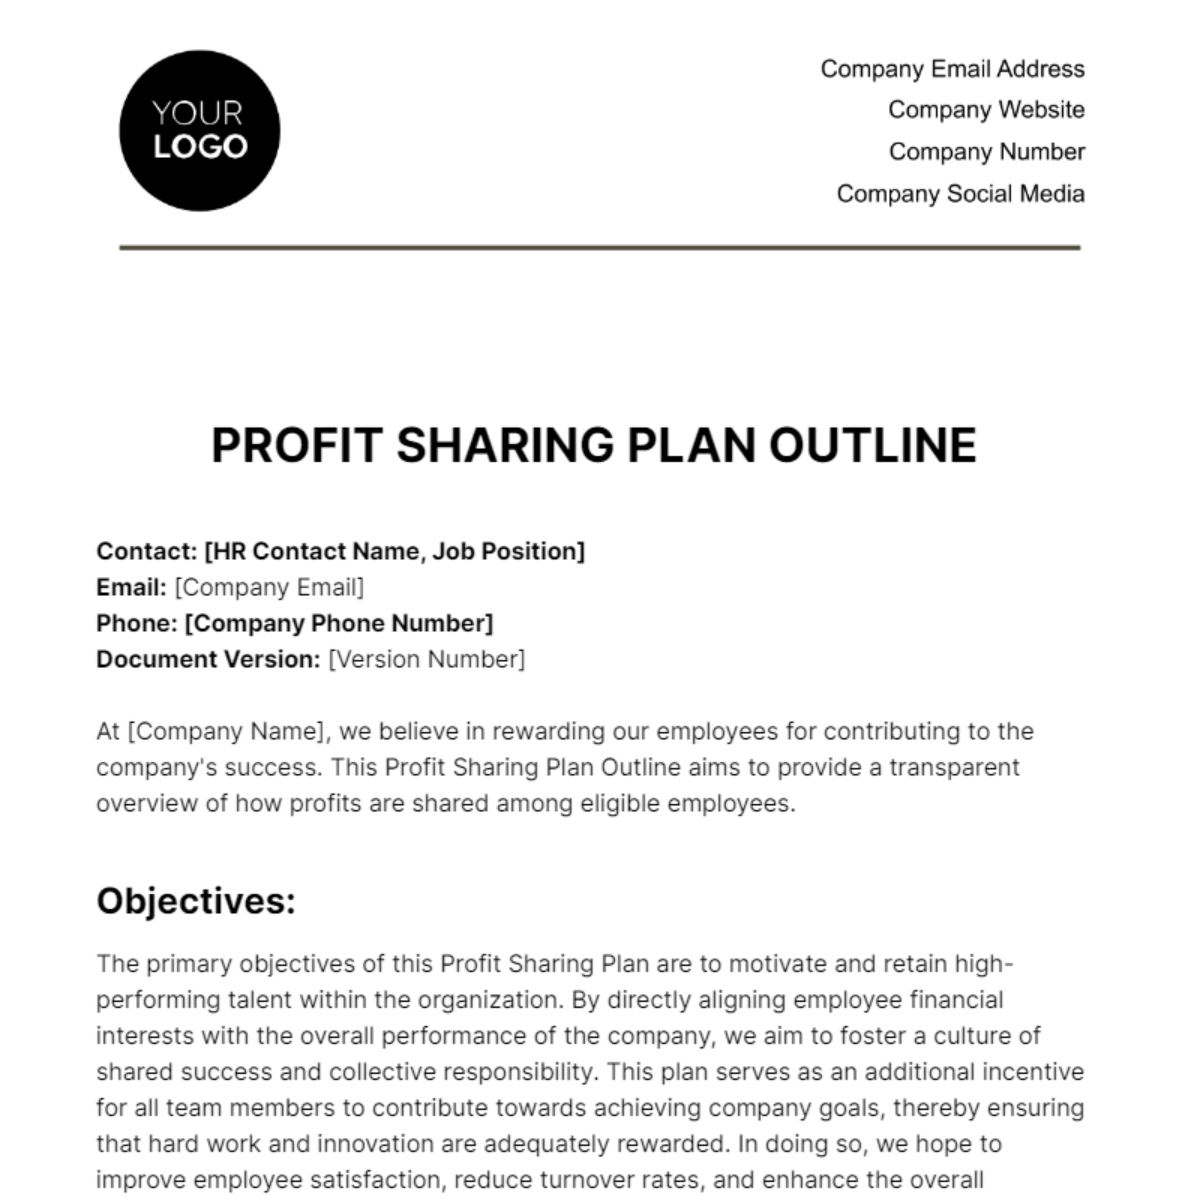 Profit-Sharing Plan Outline HR Template